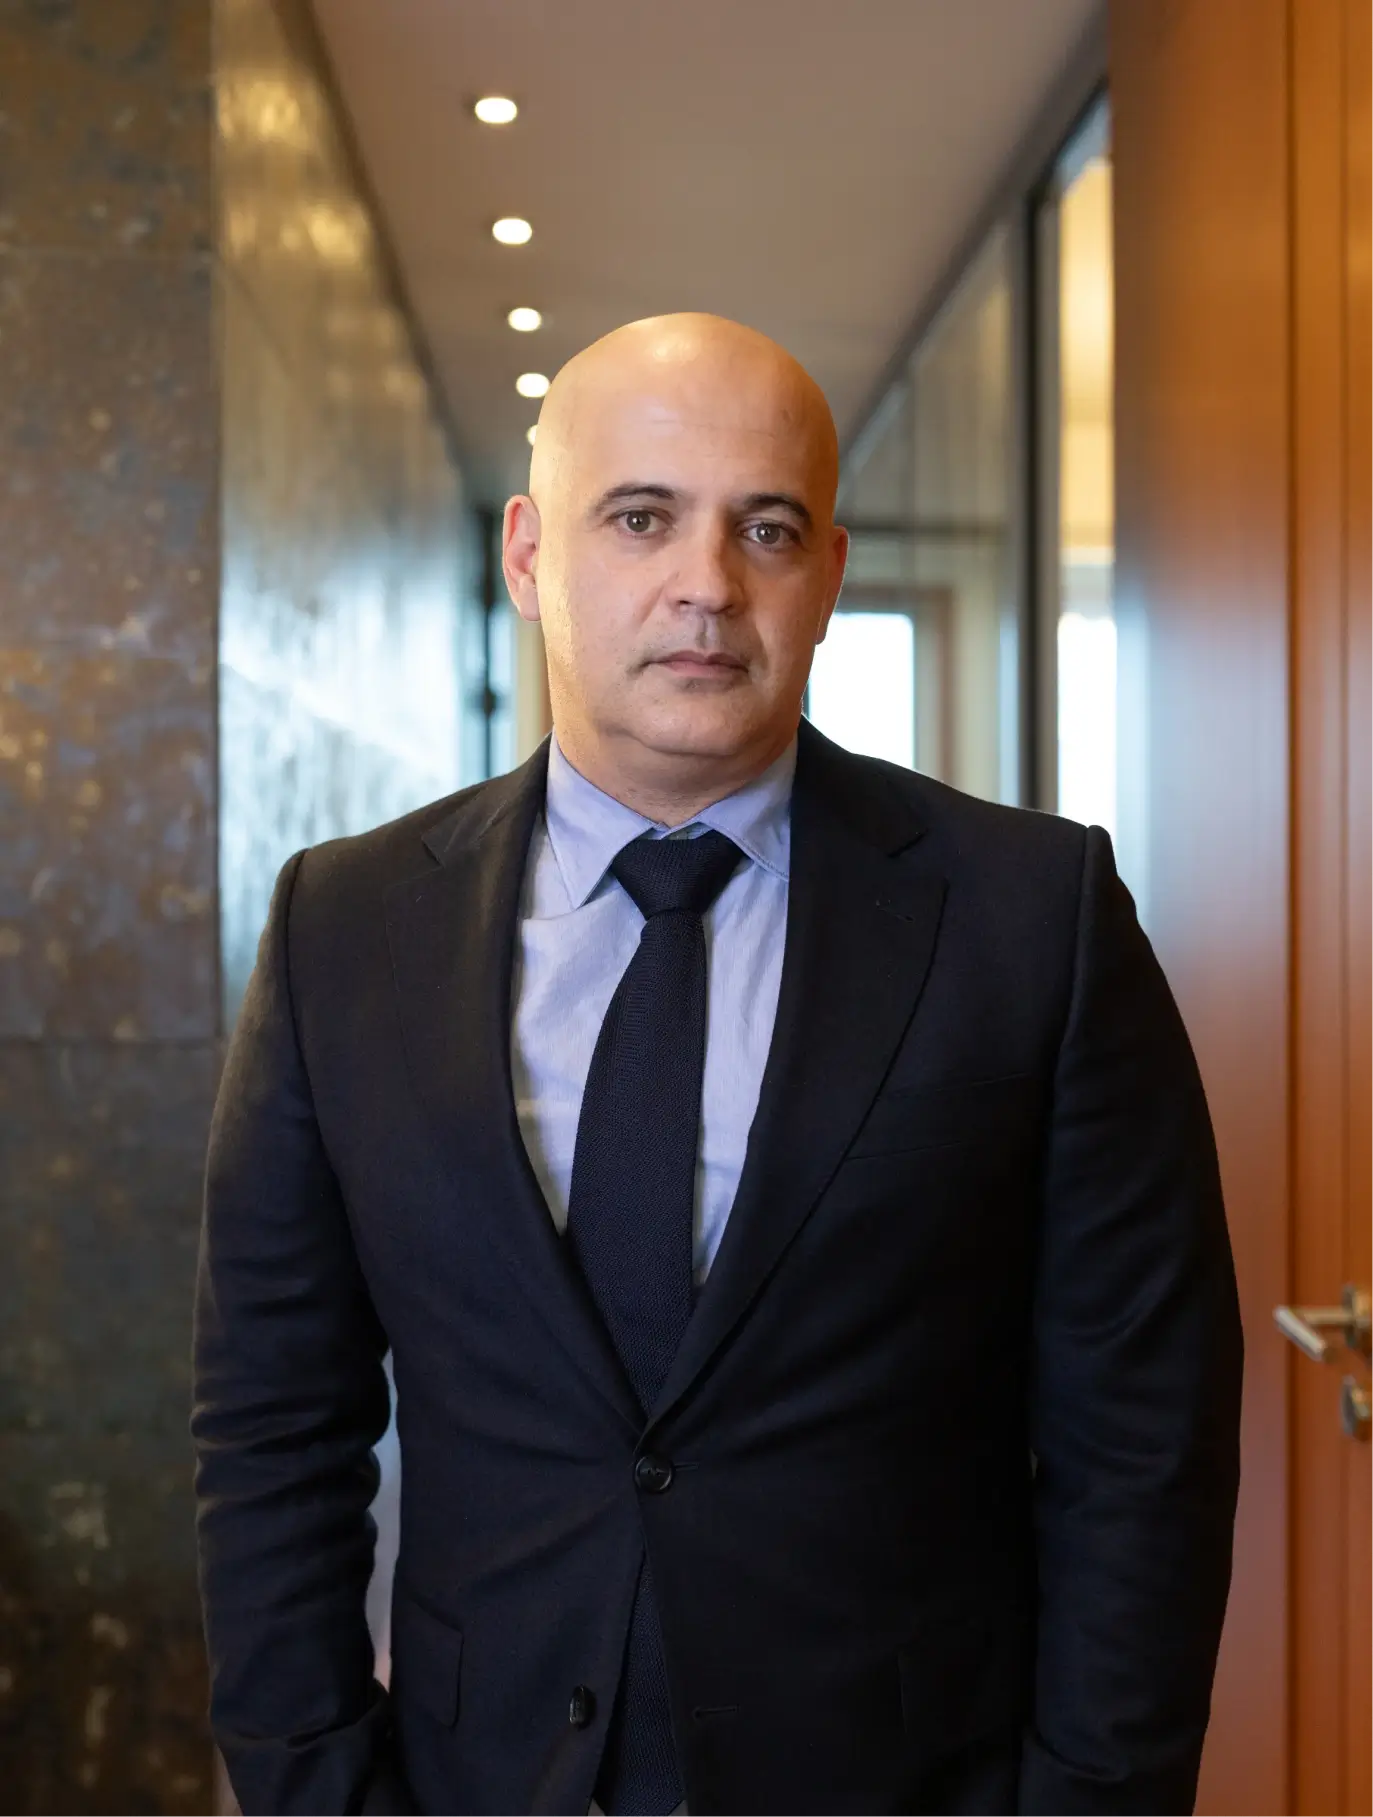 Ricardo Pinto Advogado - Direito Criminal - RJA Advogados